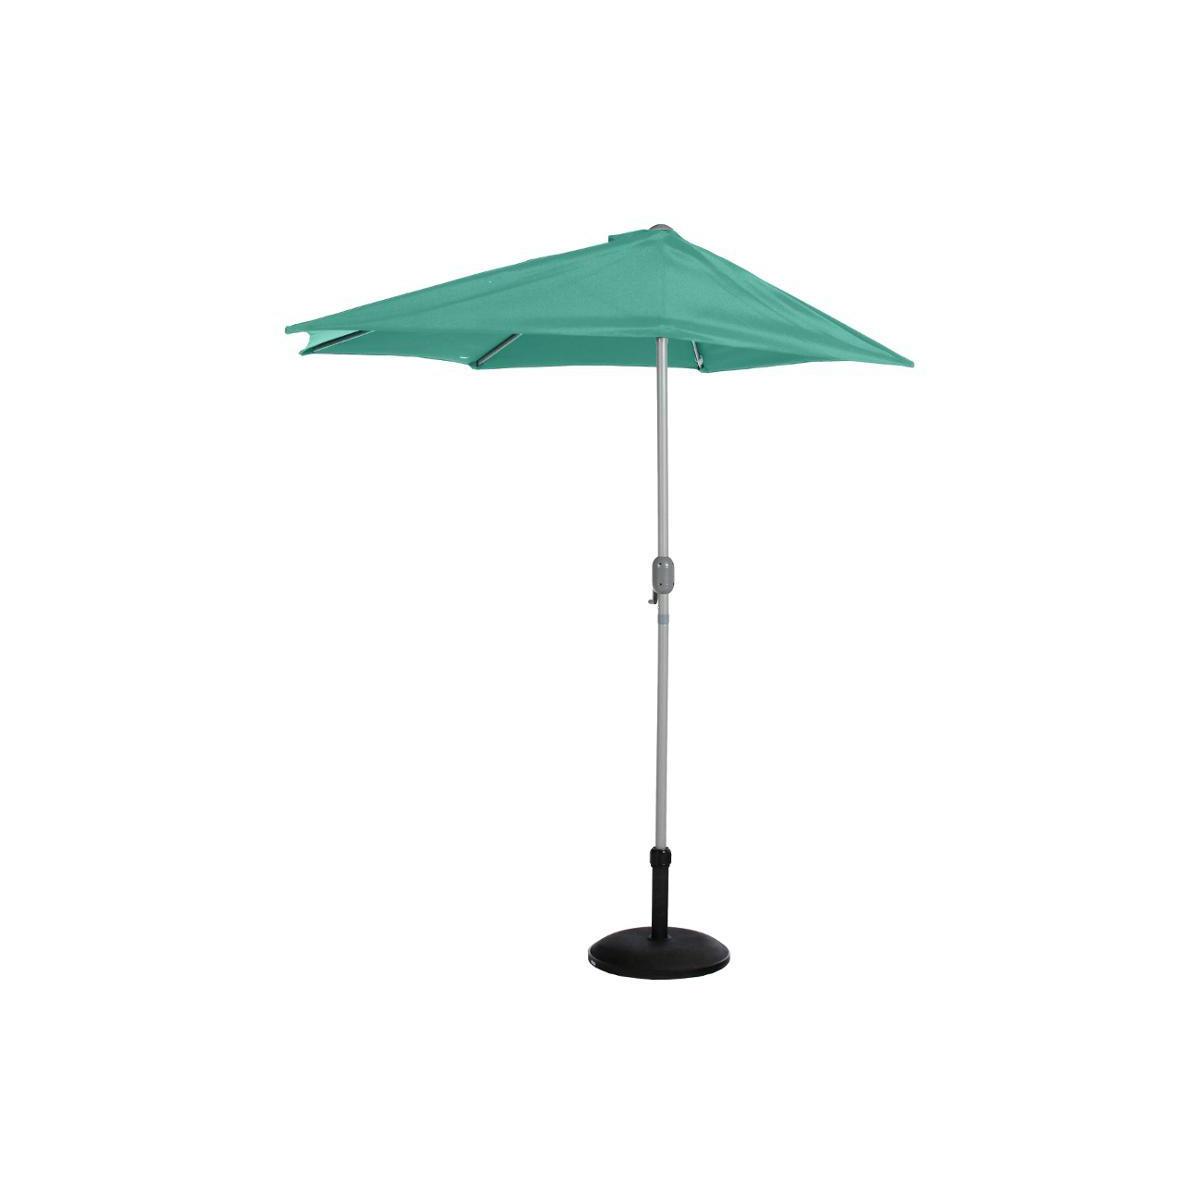 Demi-parasol Serena - ø 2.65 x H 2.35 cm - Vert émeraude - HESPERIDE